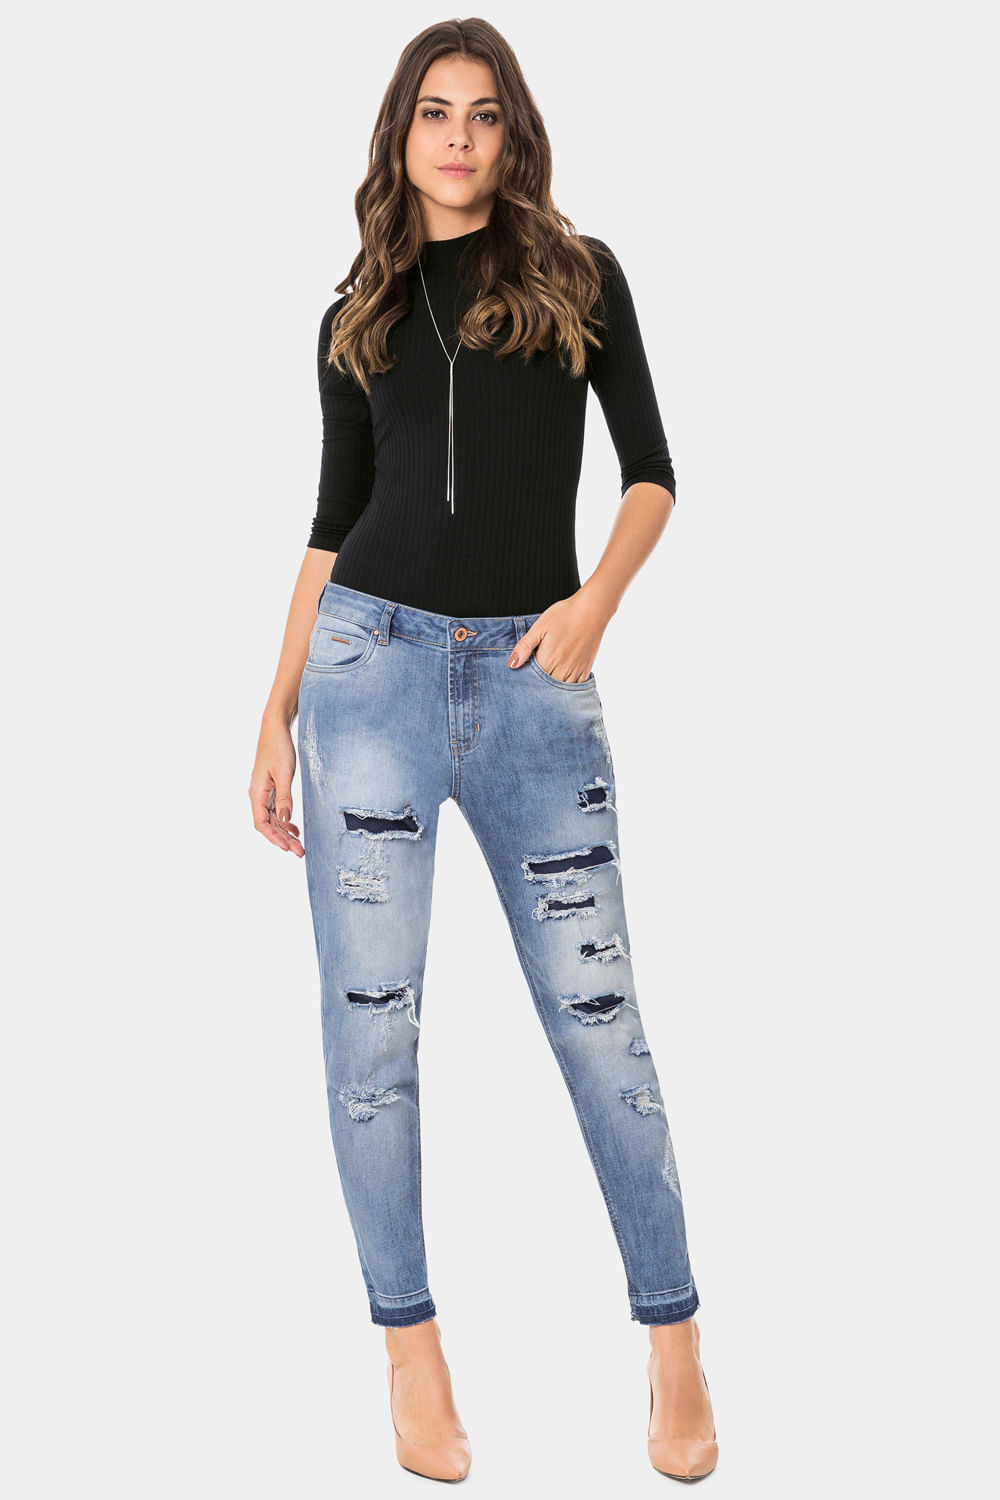 calça jeans feminina lunender